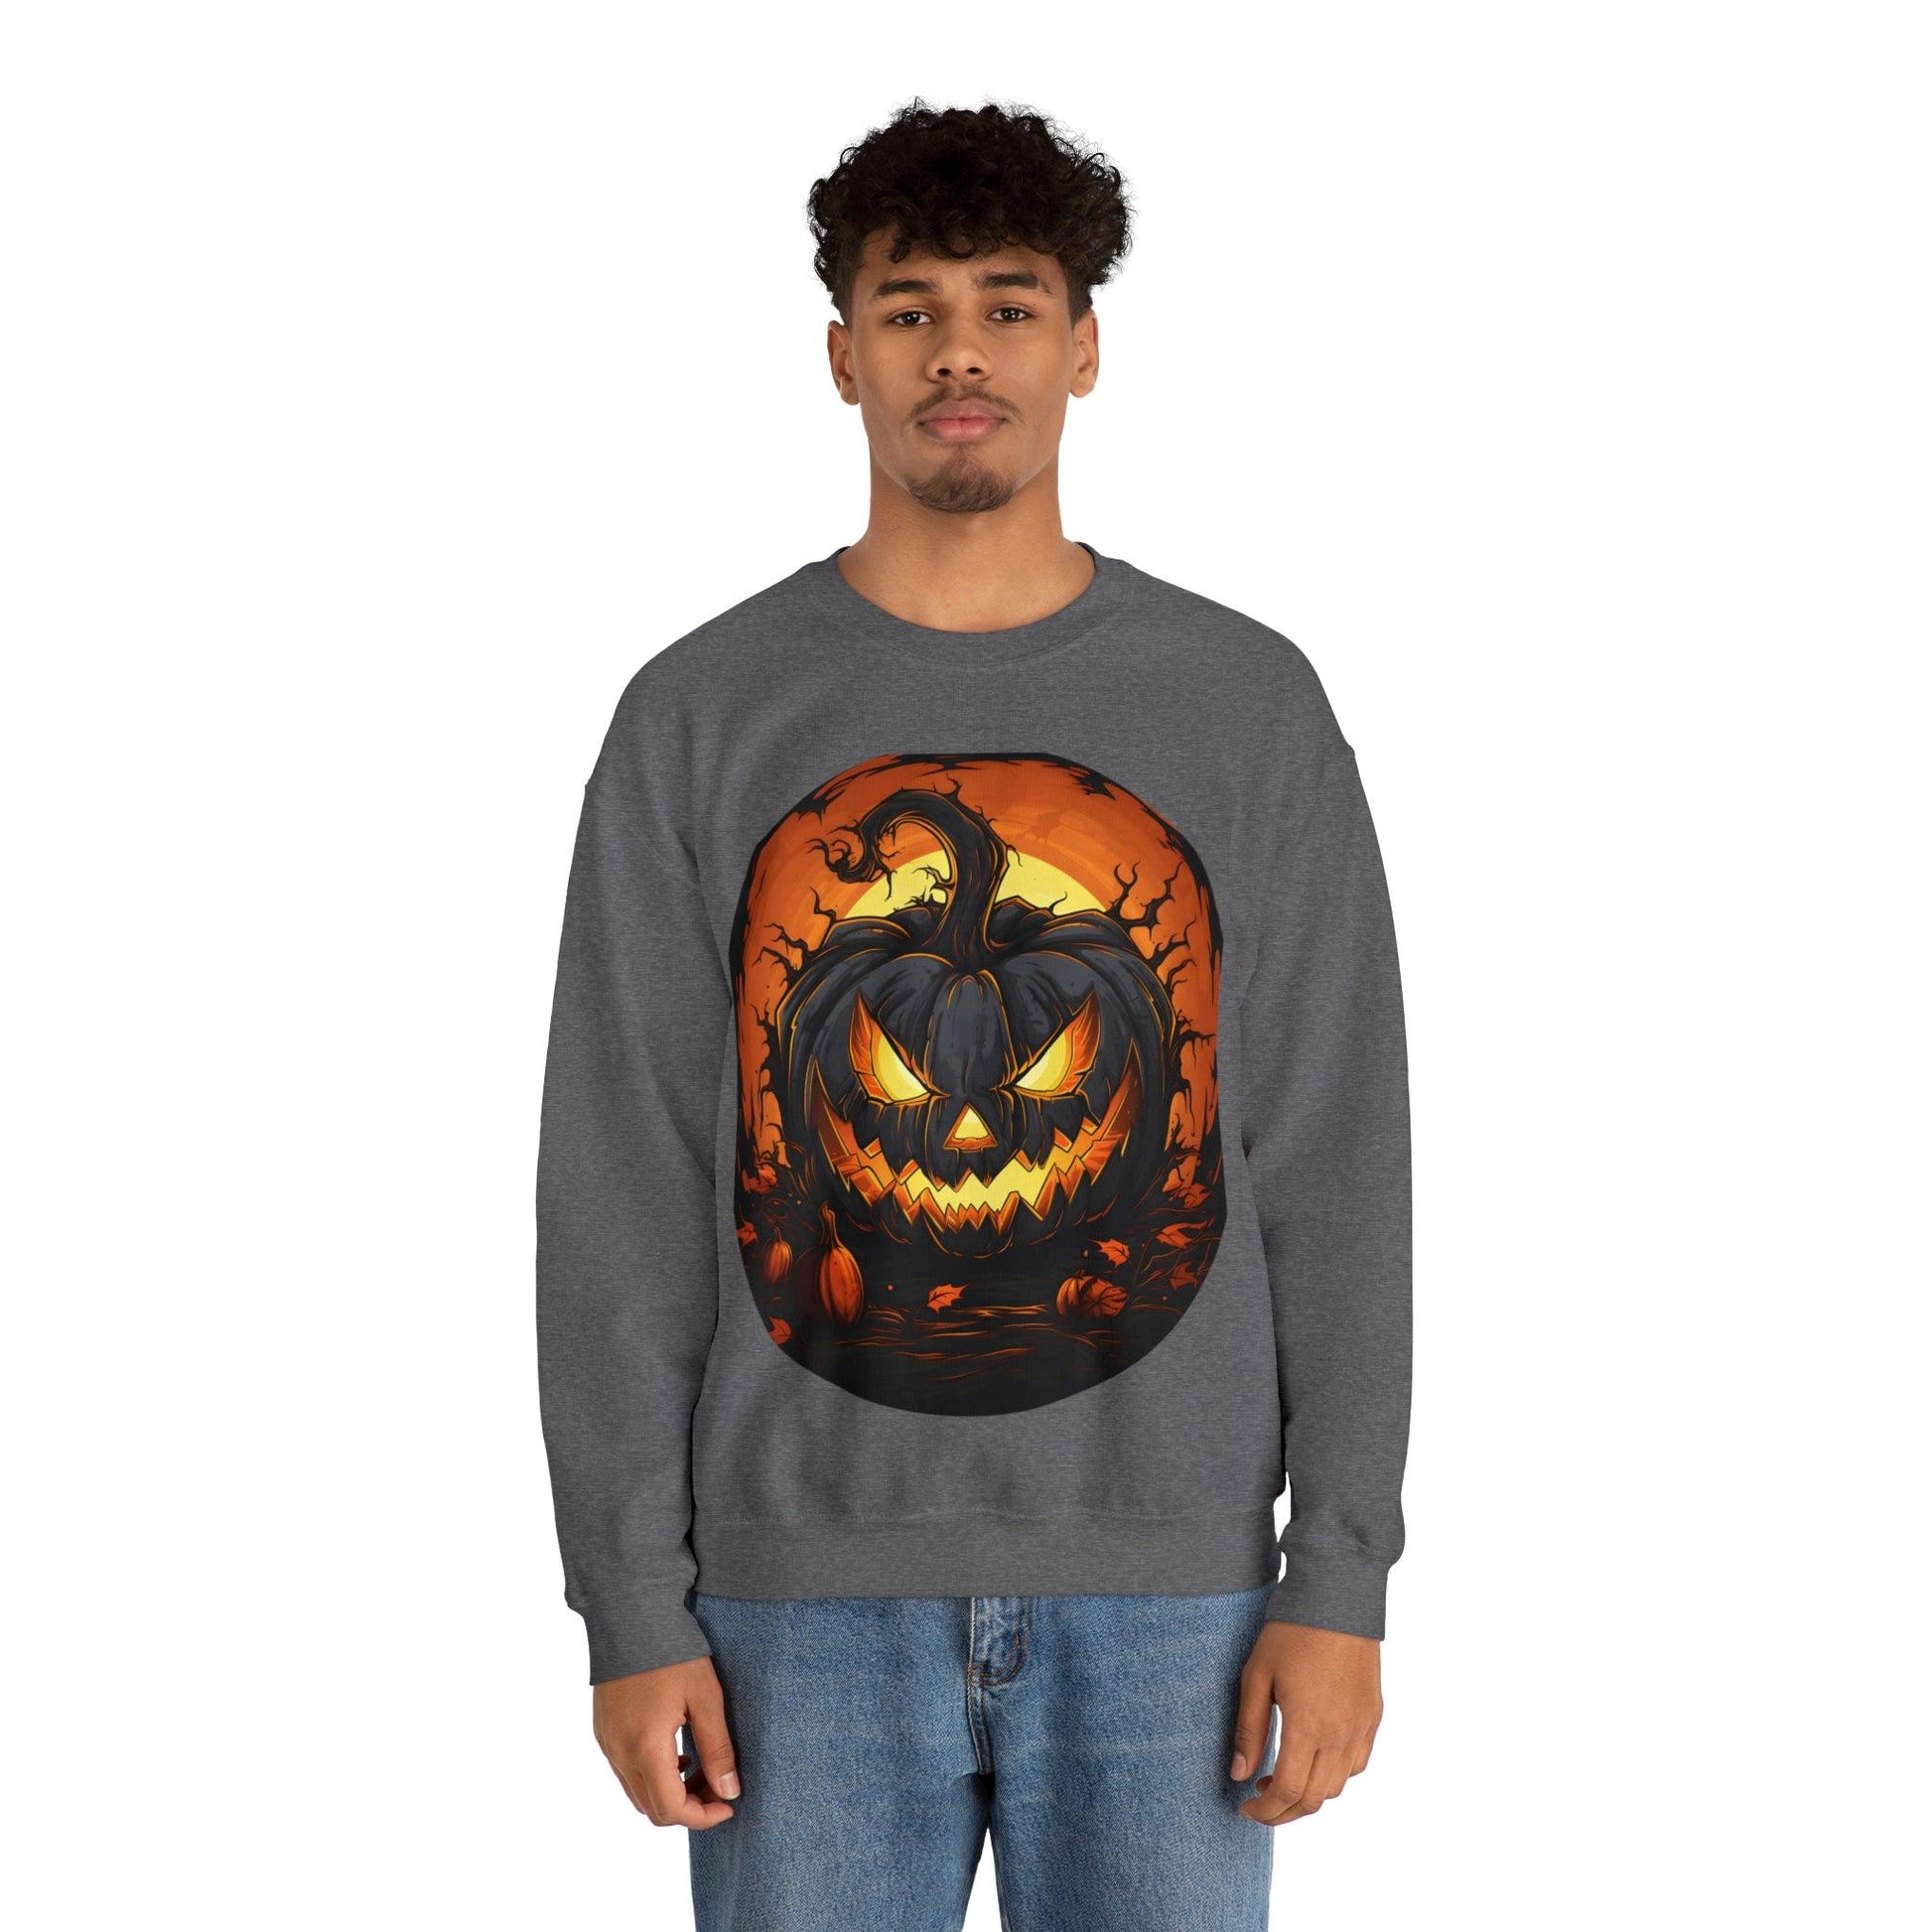 Scary Jack O Lantern Retro Halloween Sweatshirt: Your Spooky Style Statement - Giftsmojo